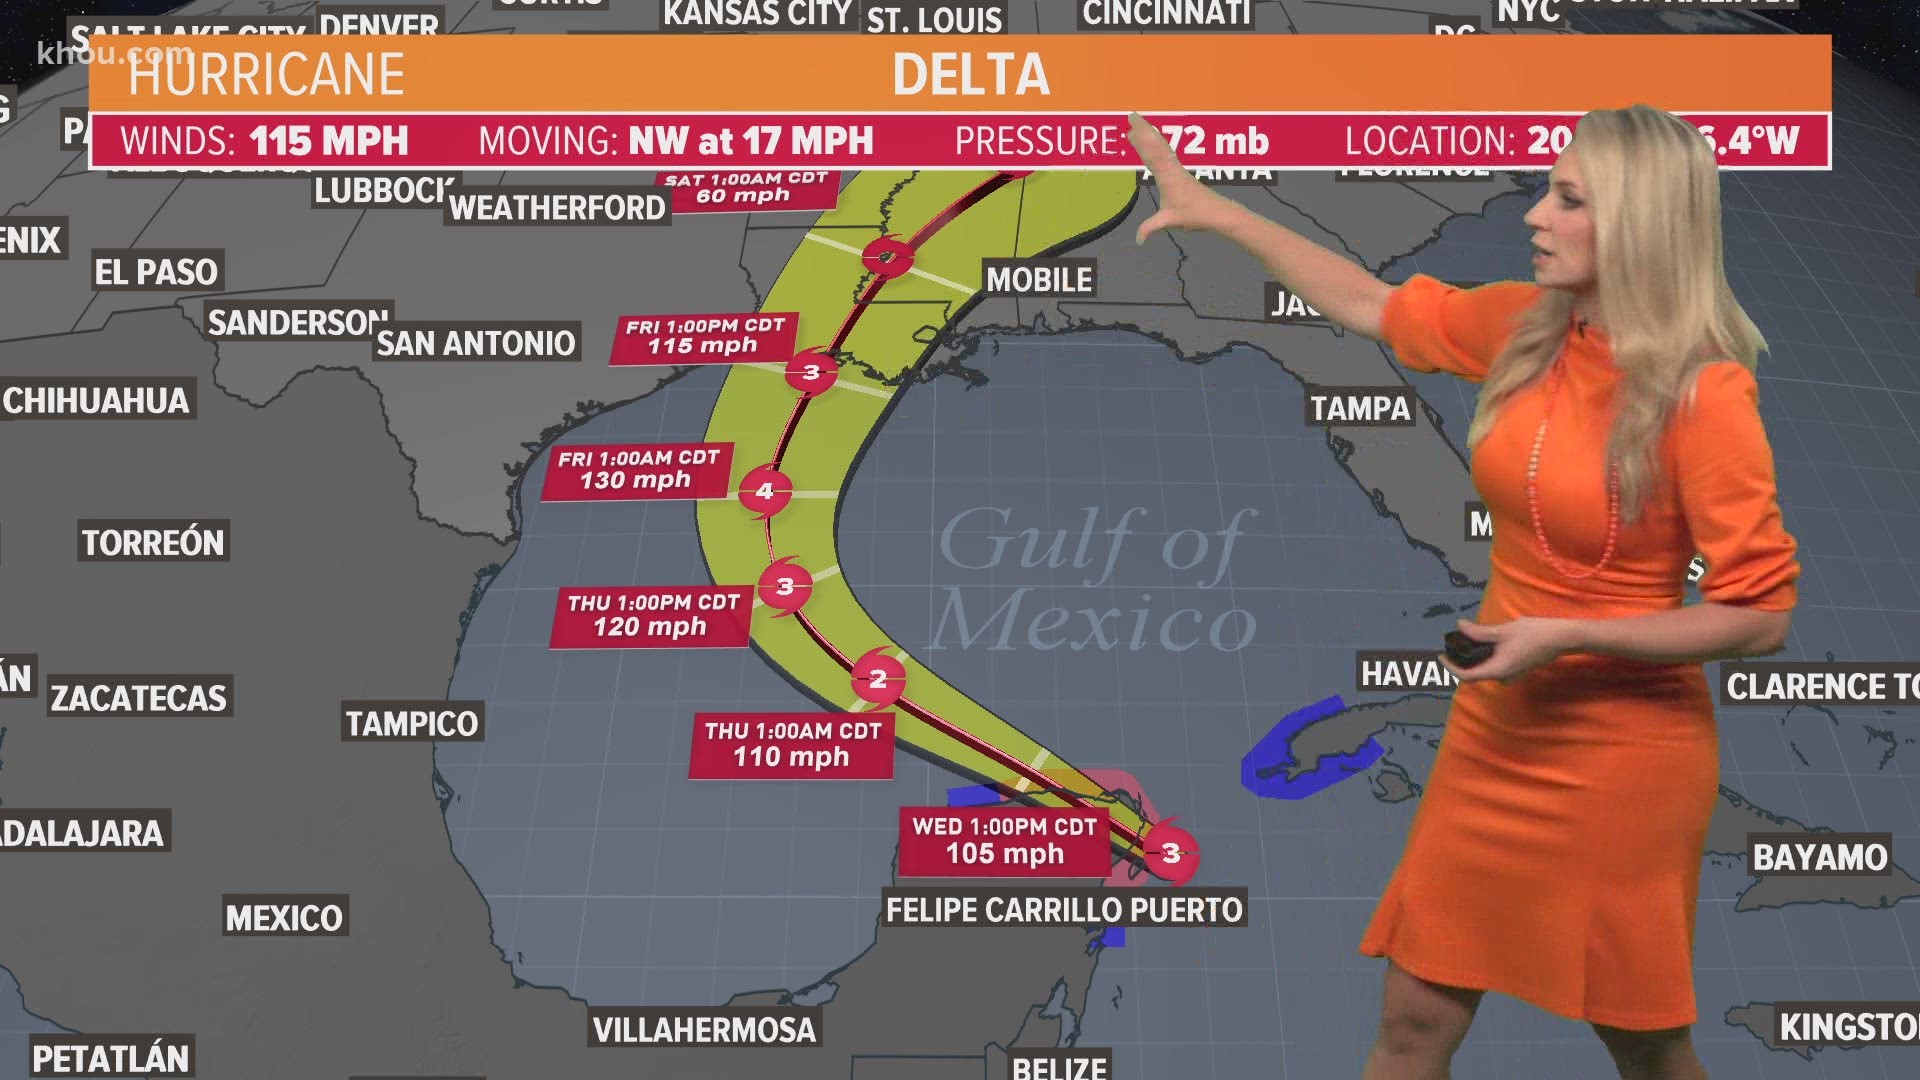 Expected landfall on Friday in Louisiana, says KHOU 11 Meteorologist Chita Craft